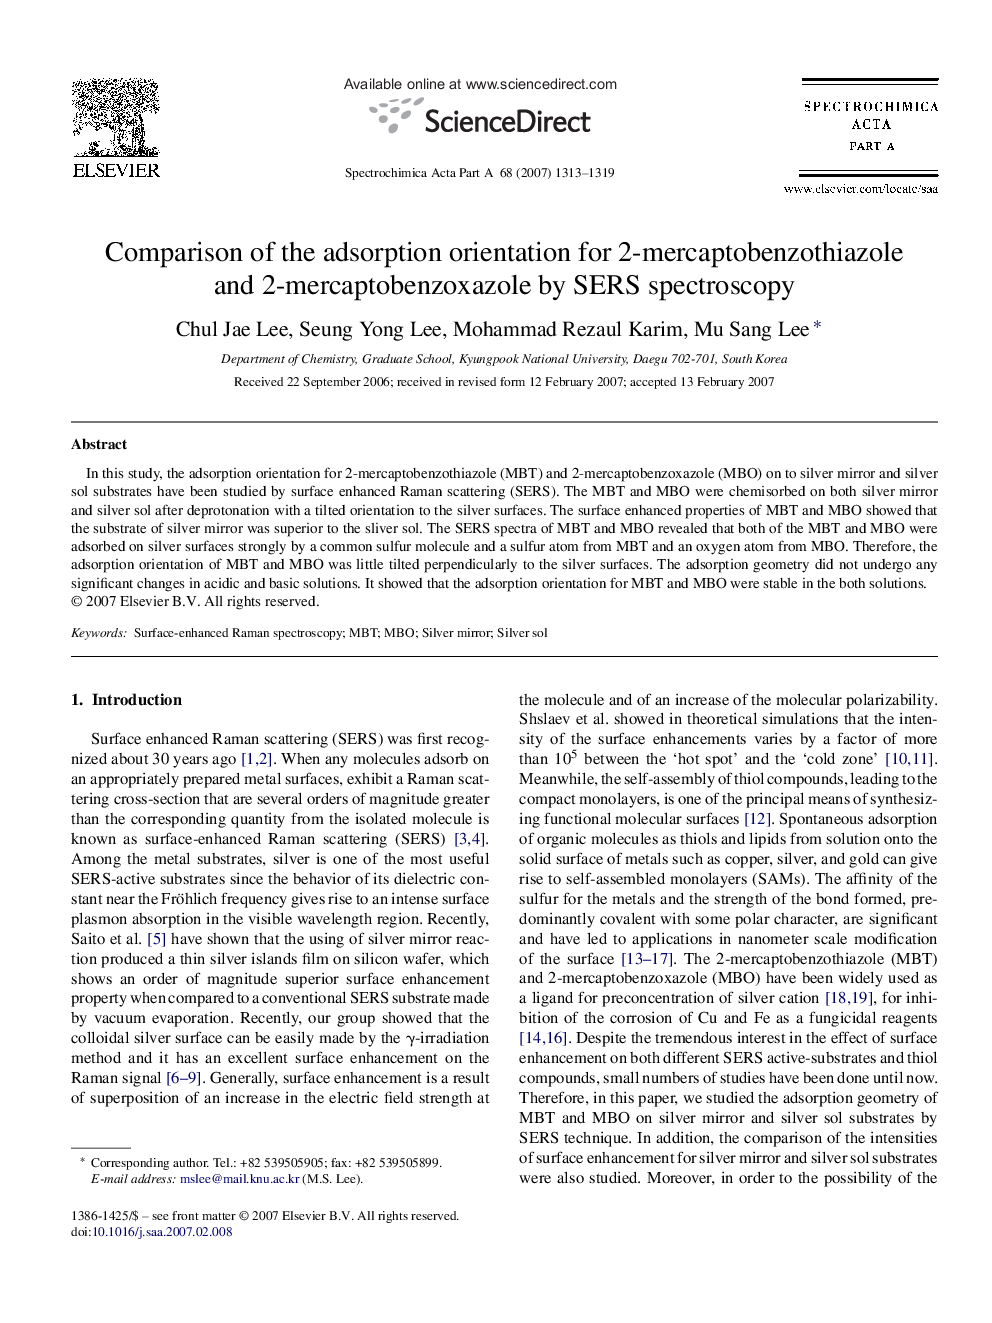 Comparison of the adsorption orientation for 2-mercaptobenzothiazole and 2-mercaptobenzoxazole by SERS spectroscopy